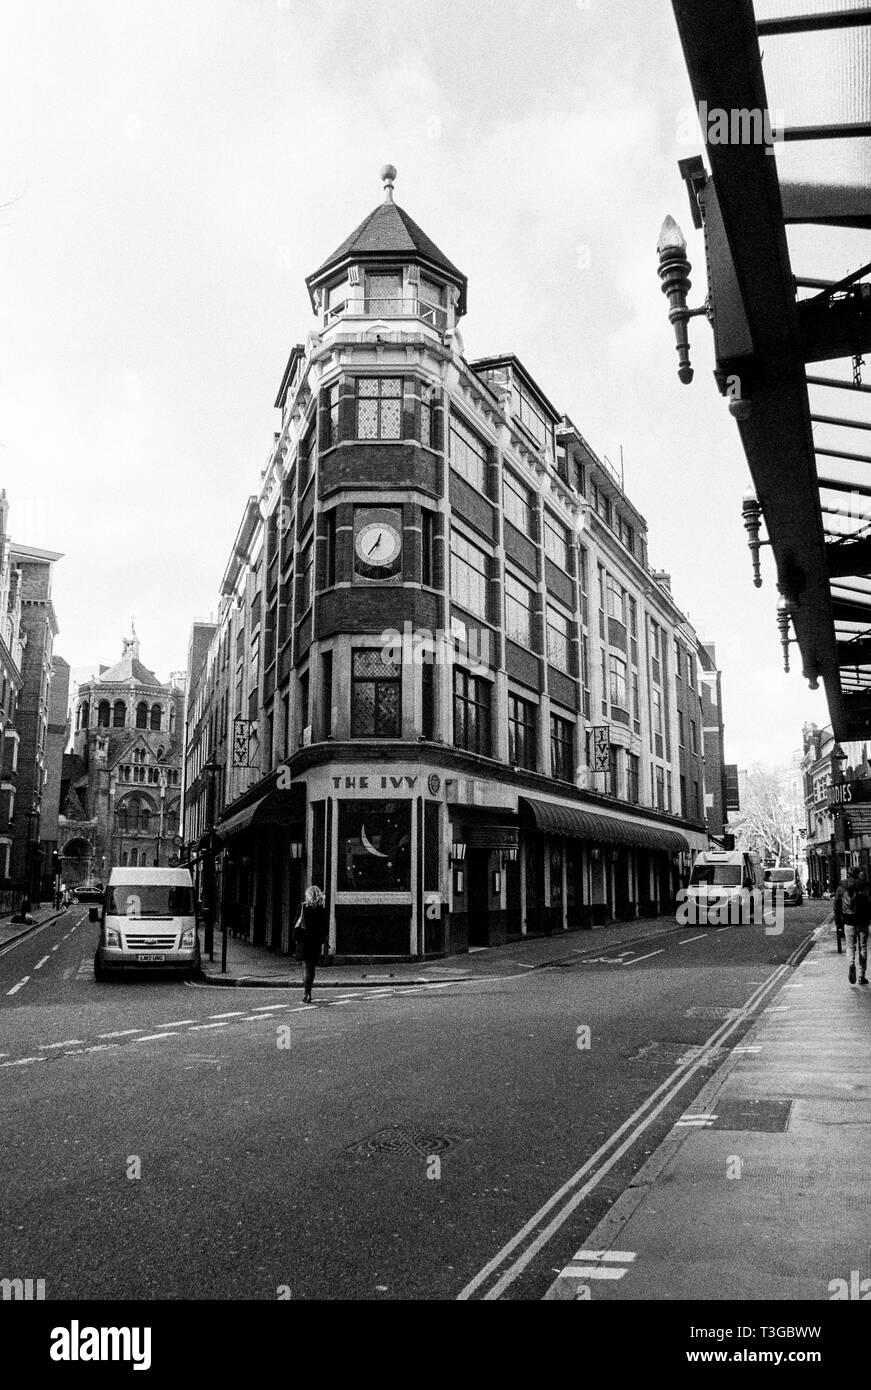 El restaurante Ivy,West St, Londres, Inglaterra, Reino Unido. Foto de stock